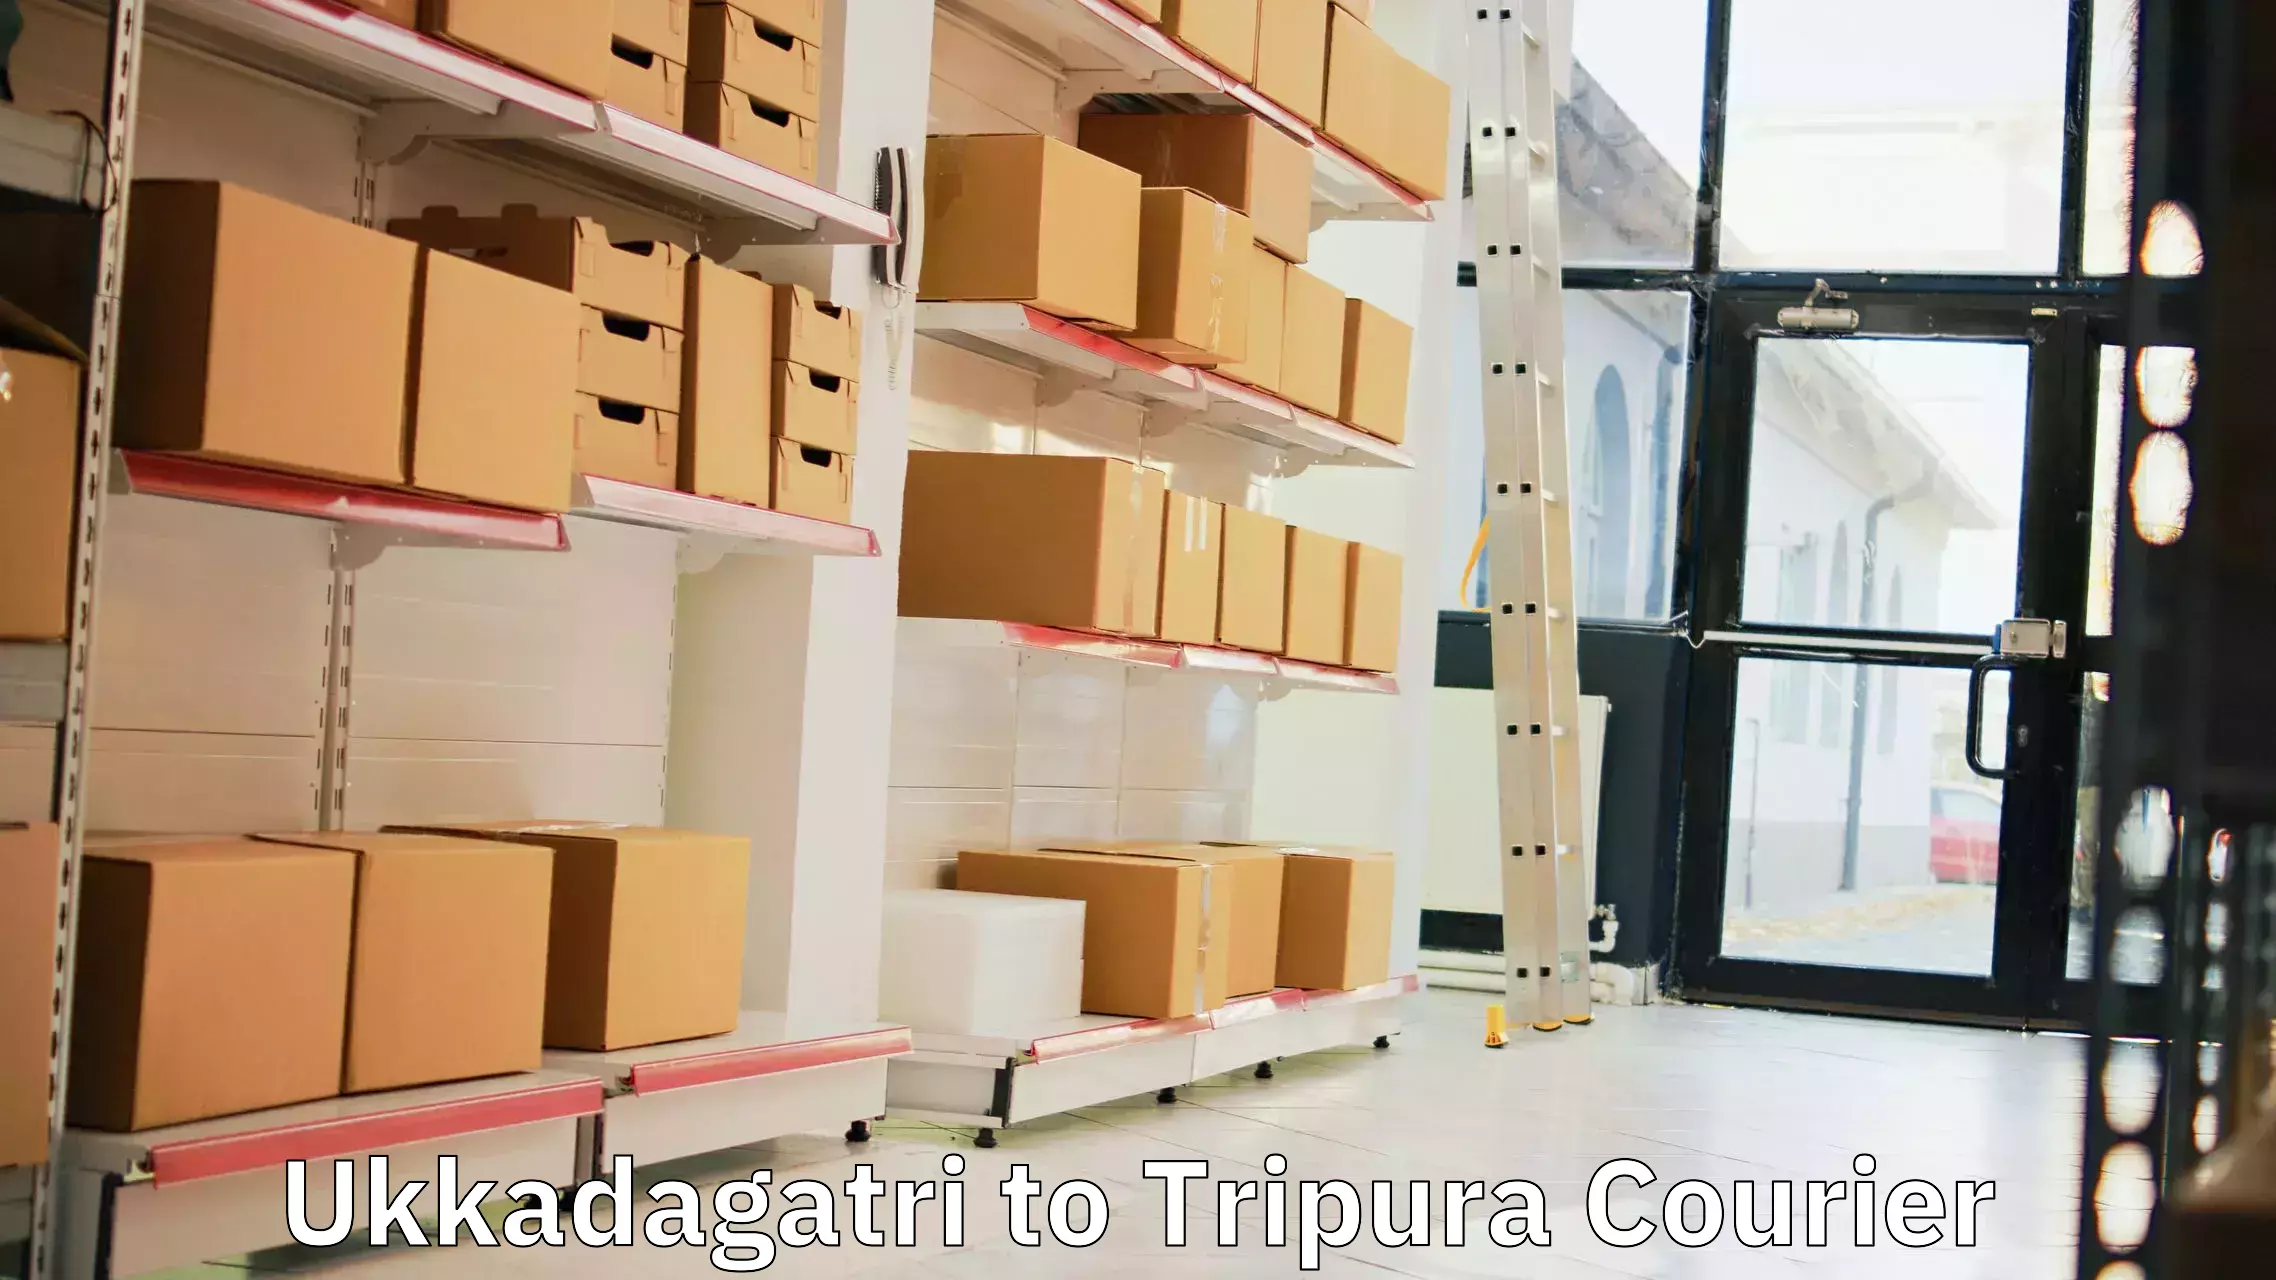 State-of-the-art courier technology Ukkadagatri to Sonamura